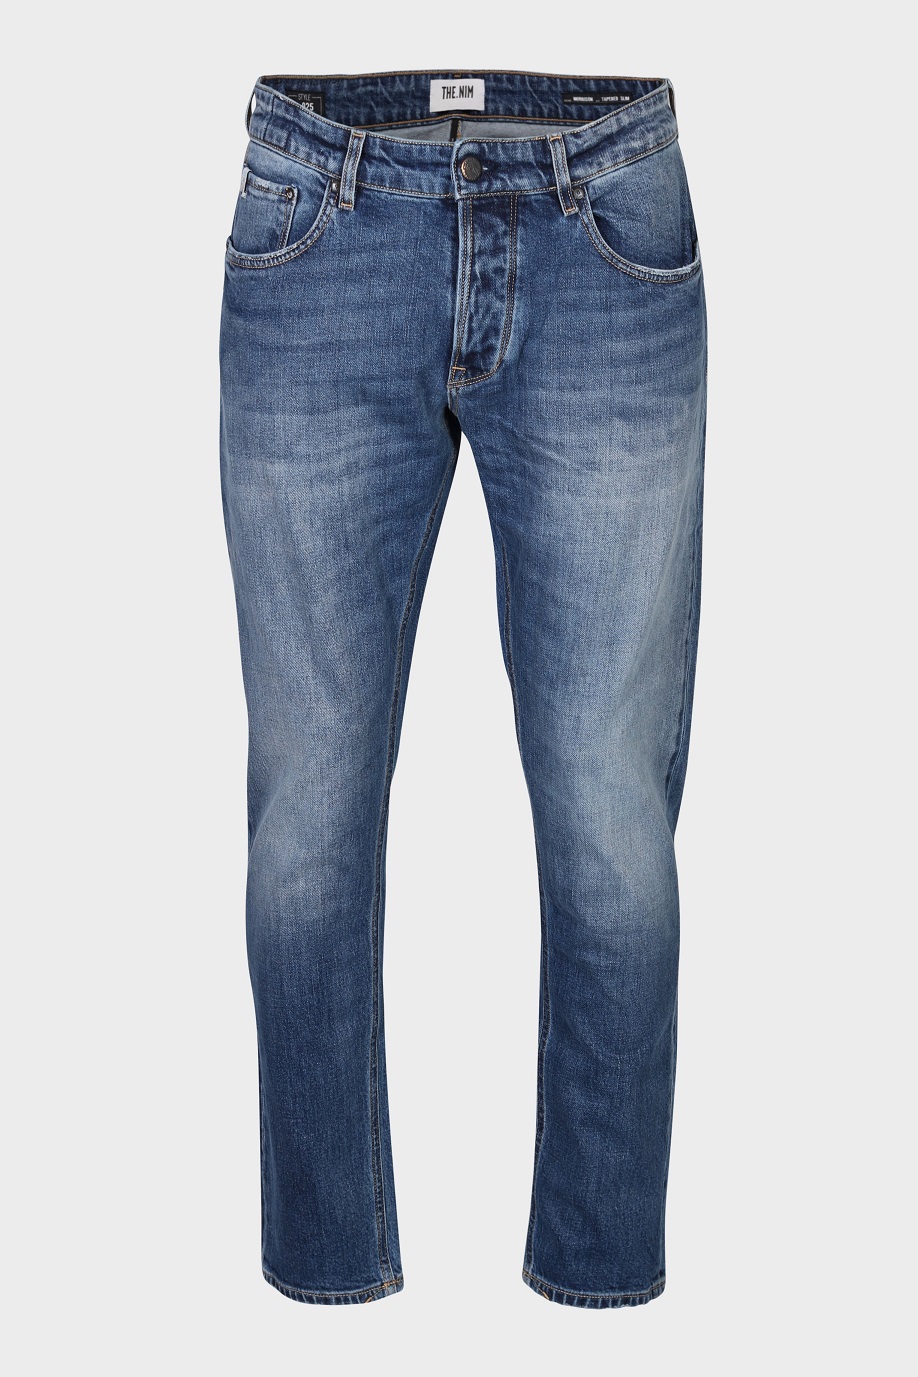 THE.NIM 925 Morrison Jeans Medium Blue